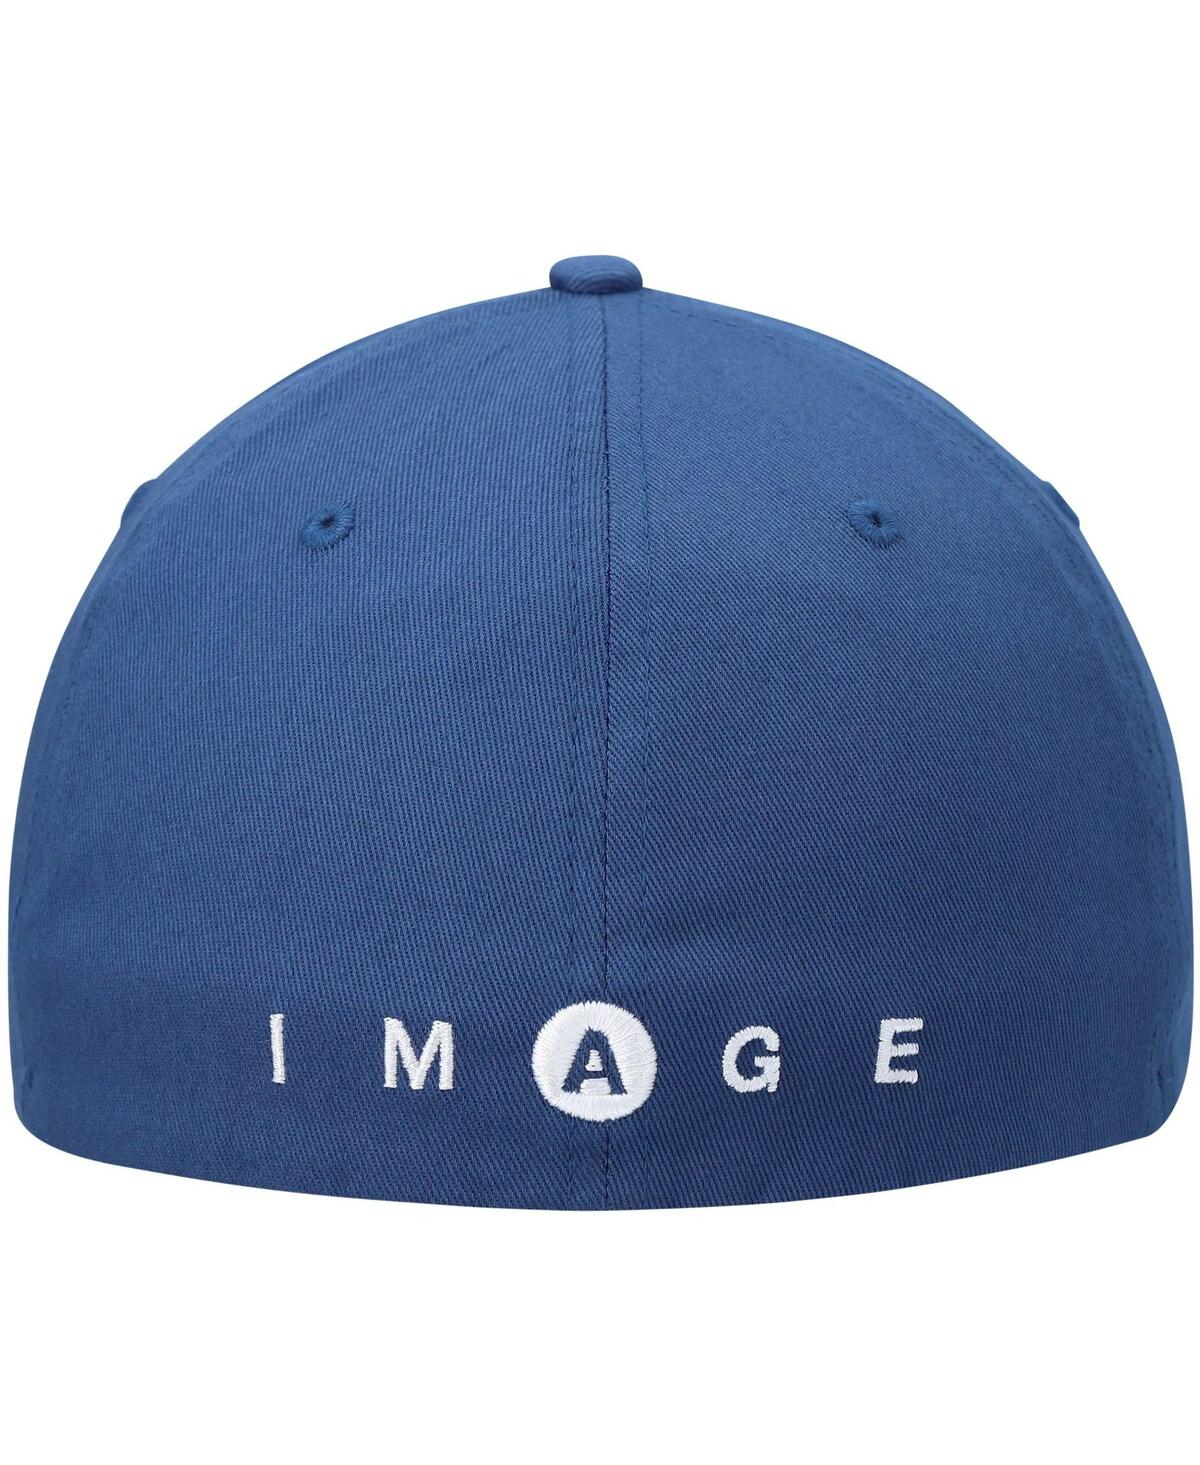 Shop Fox Men's  Blue Skarz Flex Hat